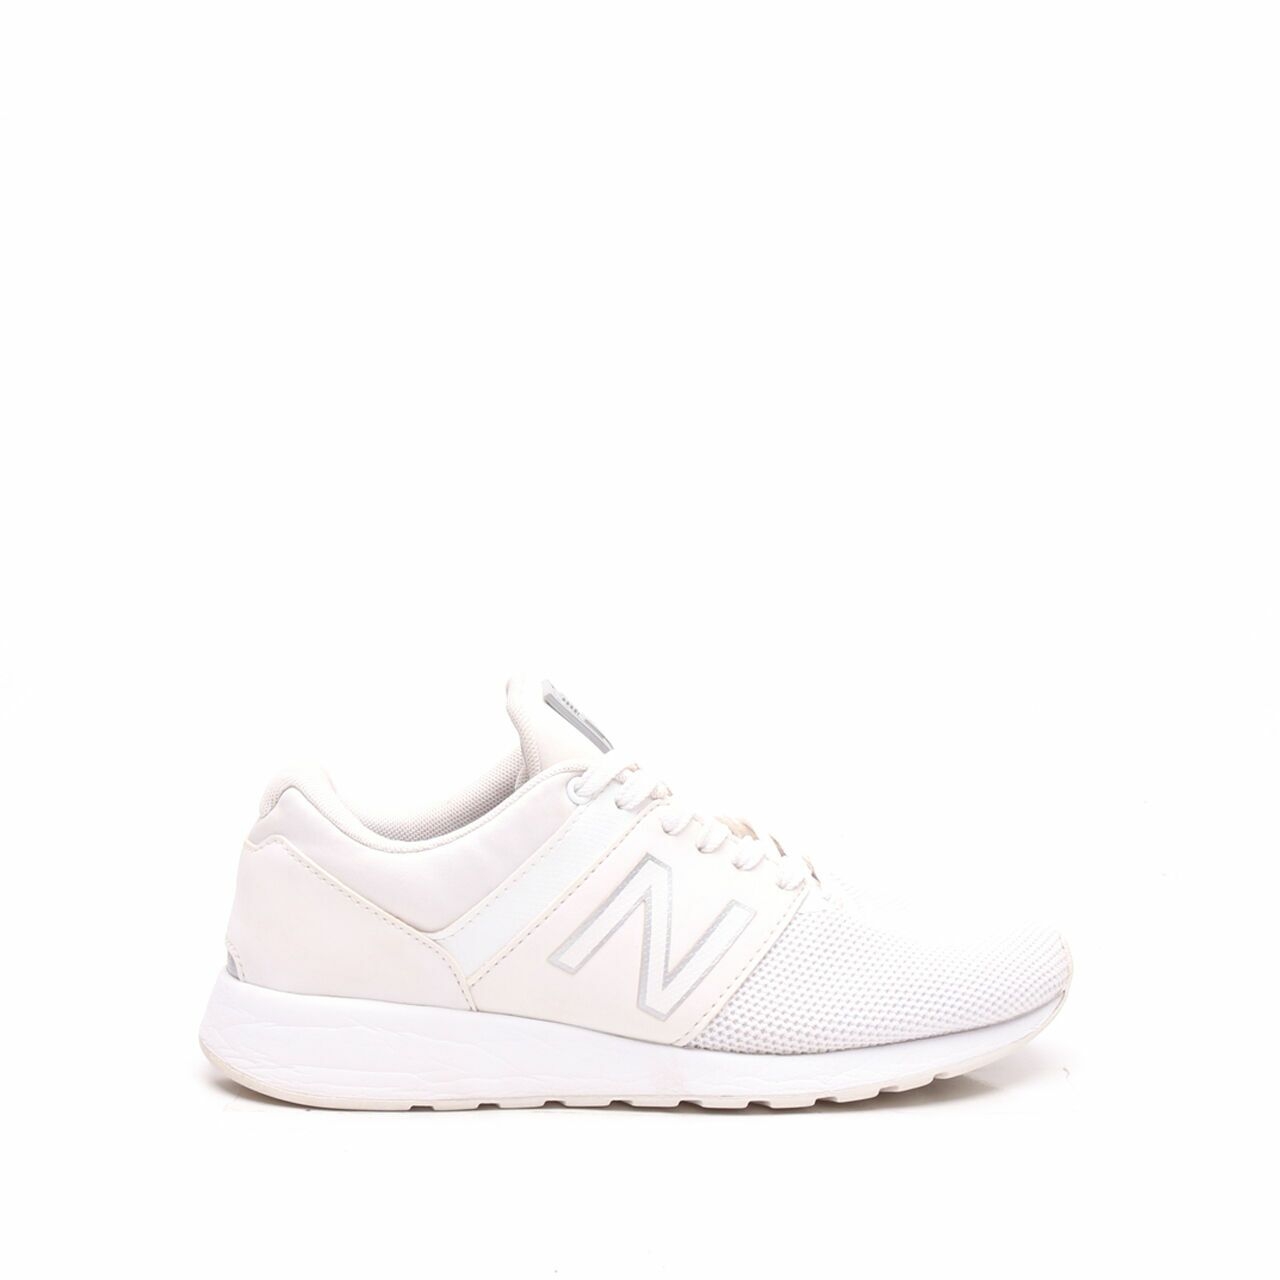 New Balance 24 Women's White Sneakers